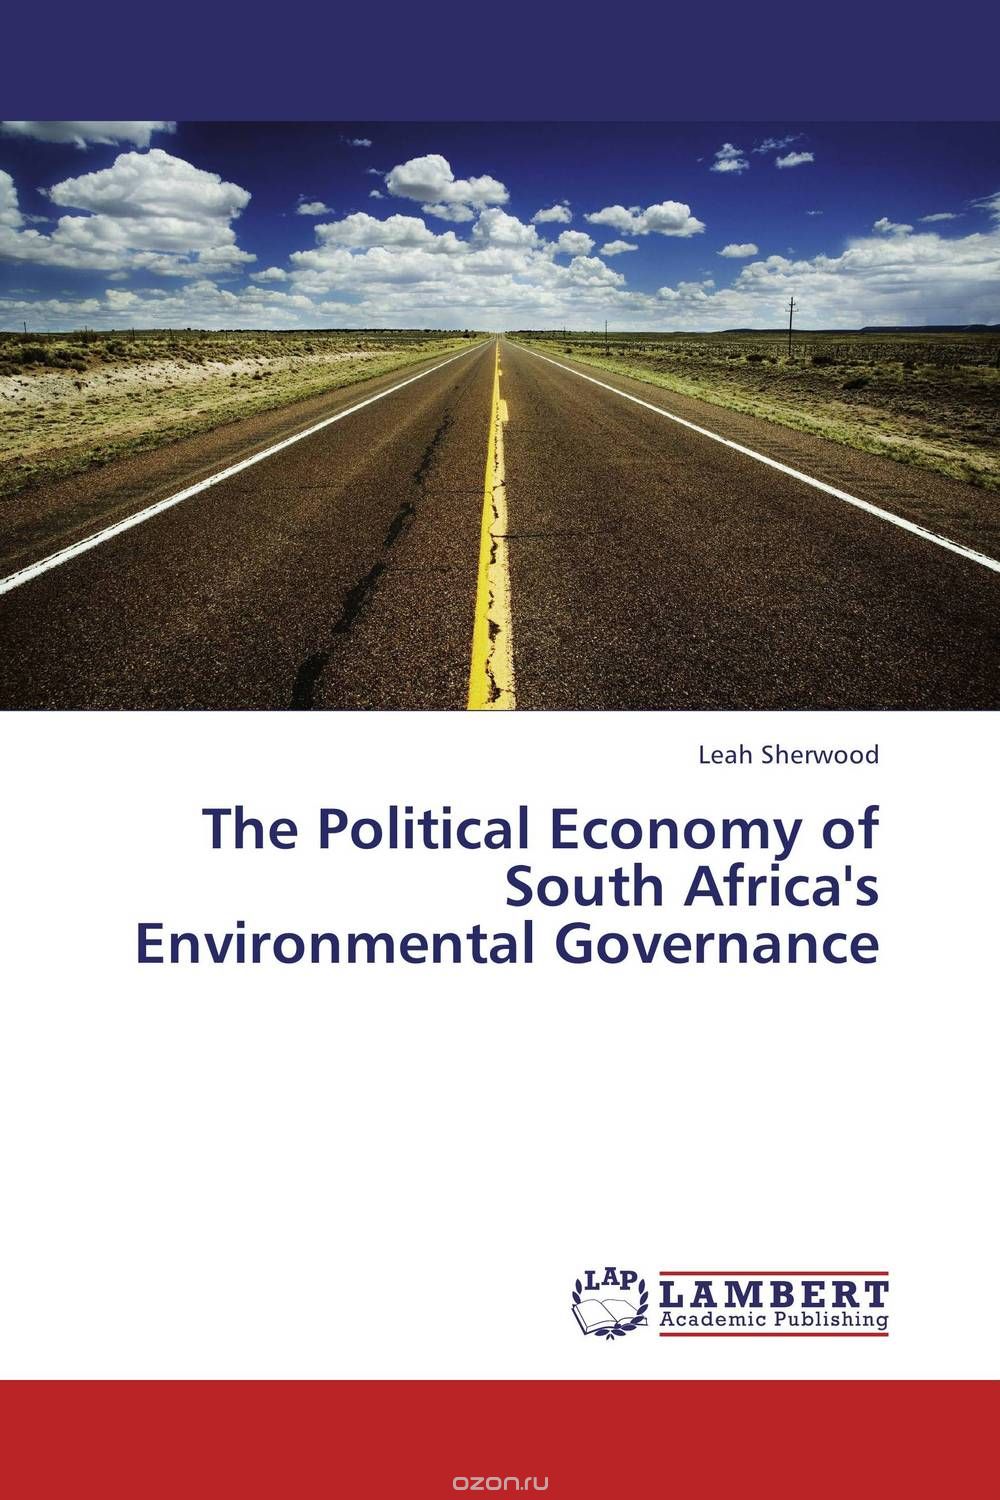 Скачать книгу "The Political Economy of South Africa's Environmental Governance"